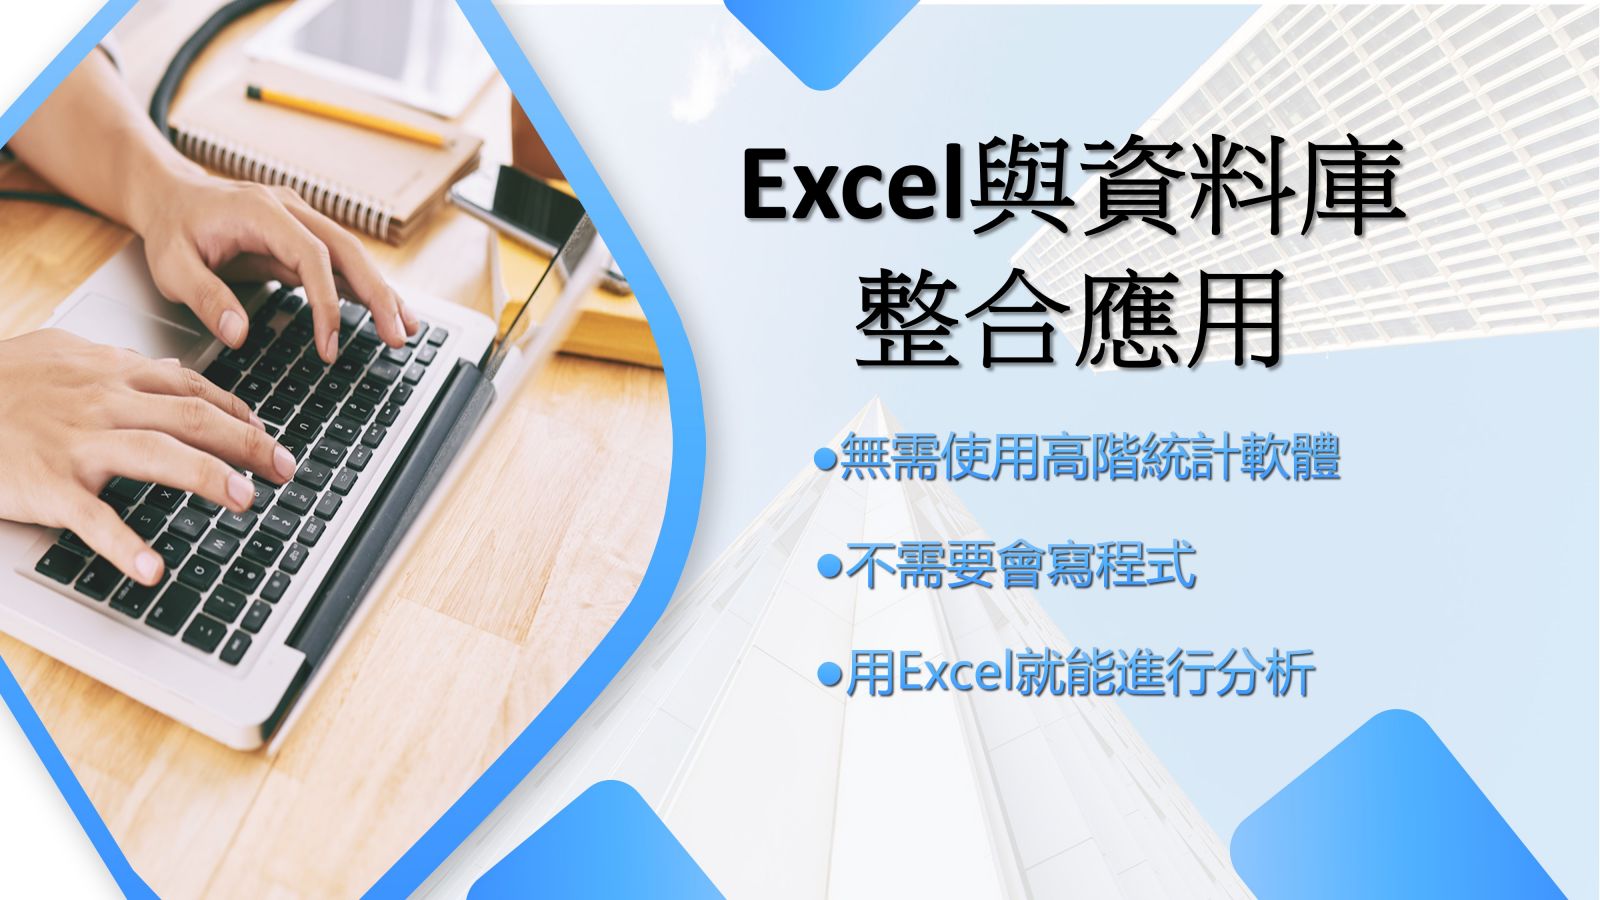 Excel與資料庫整合應用講座 協助做好資料整理與分析 訓練課程 Cicr 中華工商研究院 全球資訊網